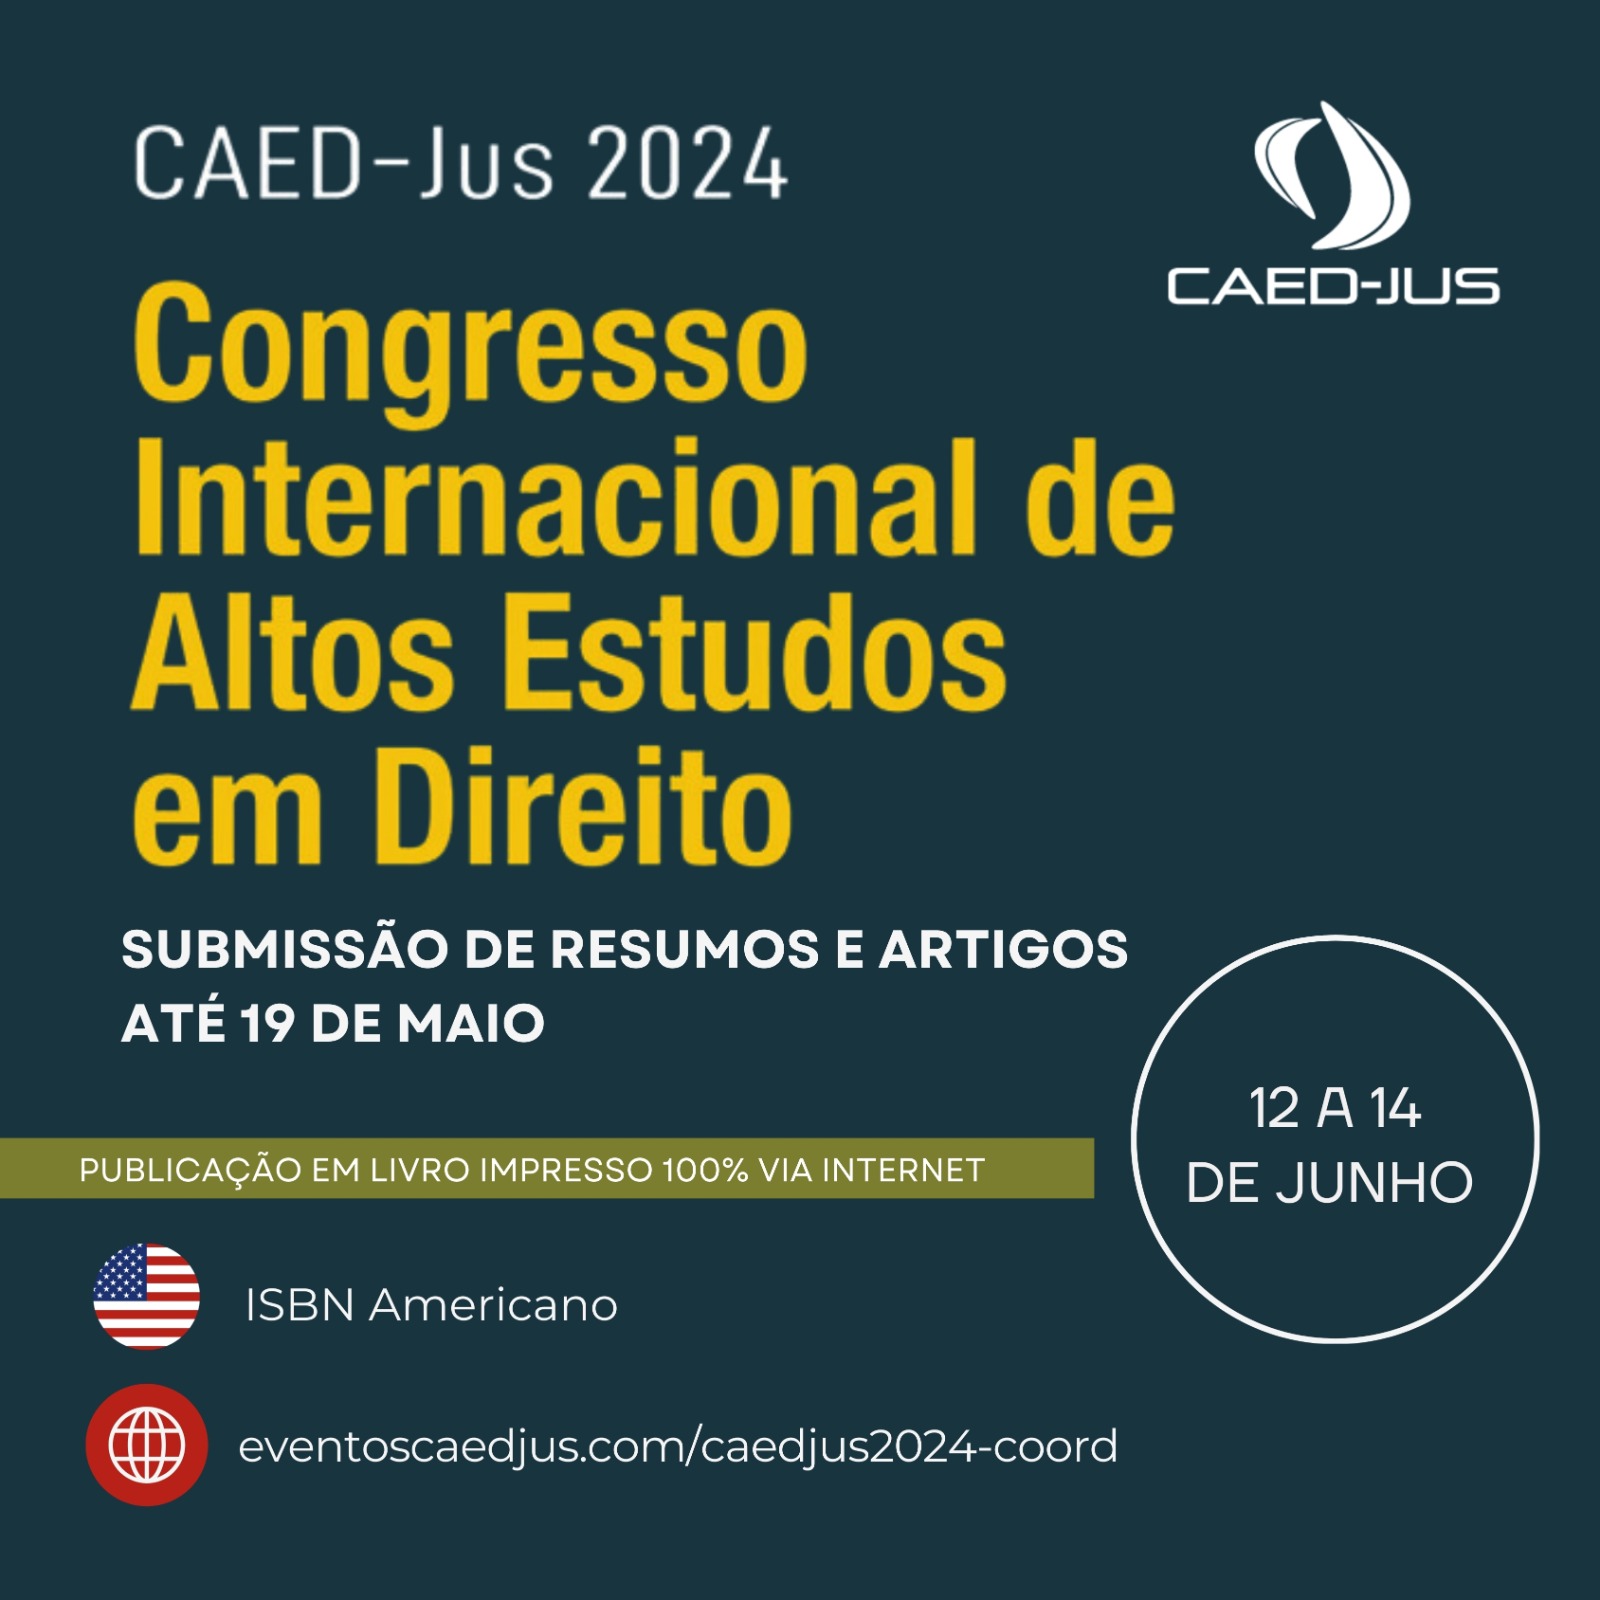 1- CAED-JUS 2024